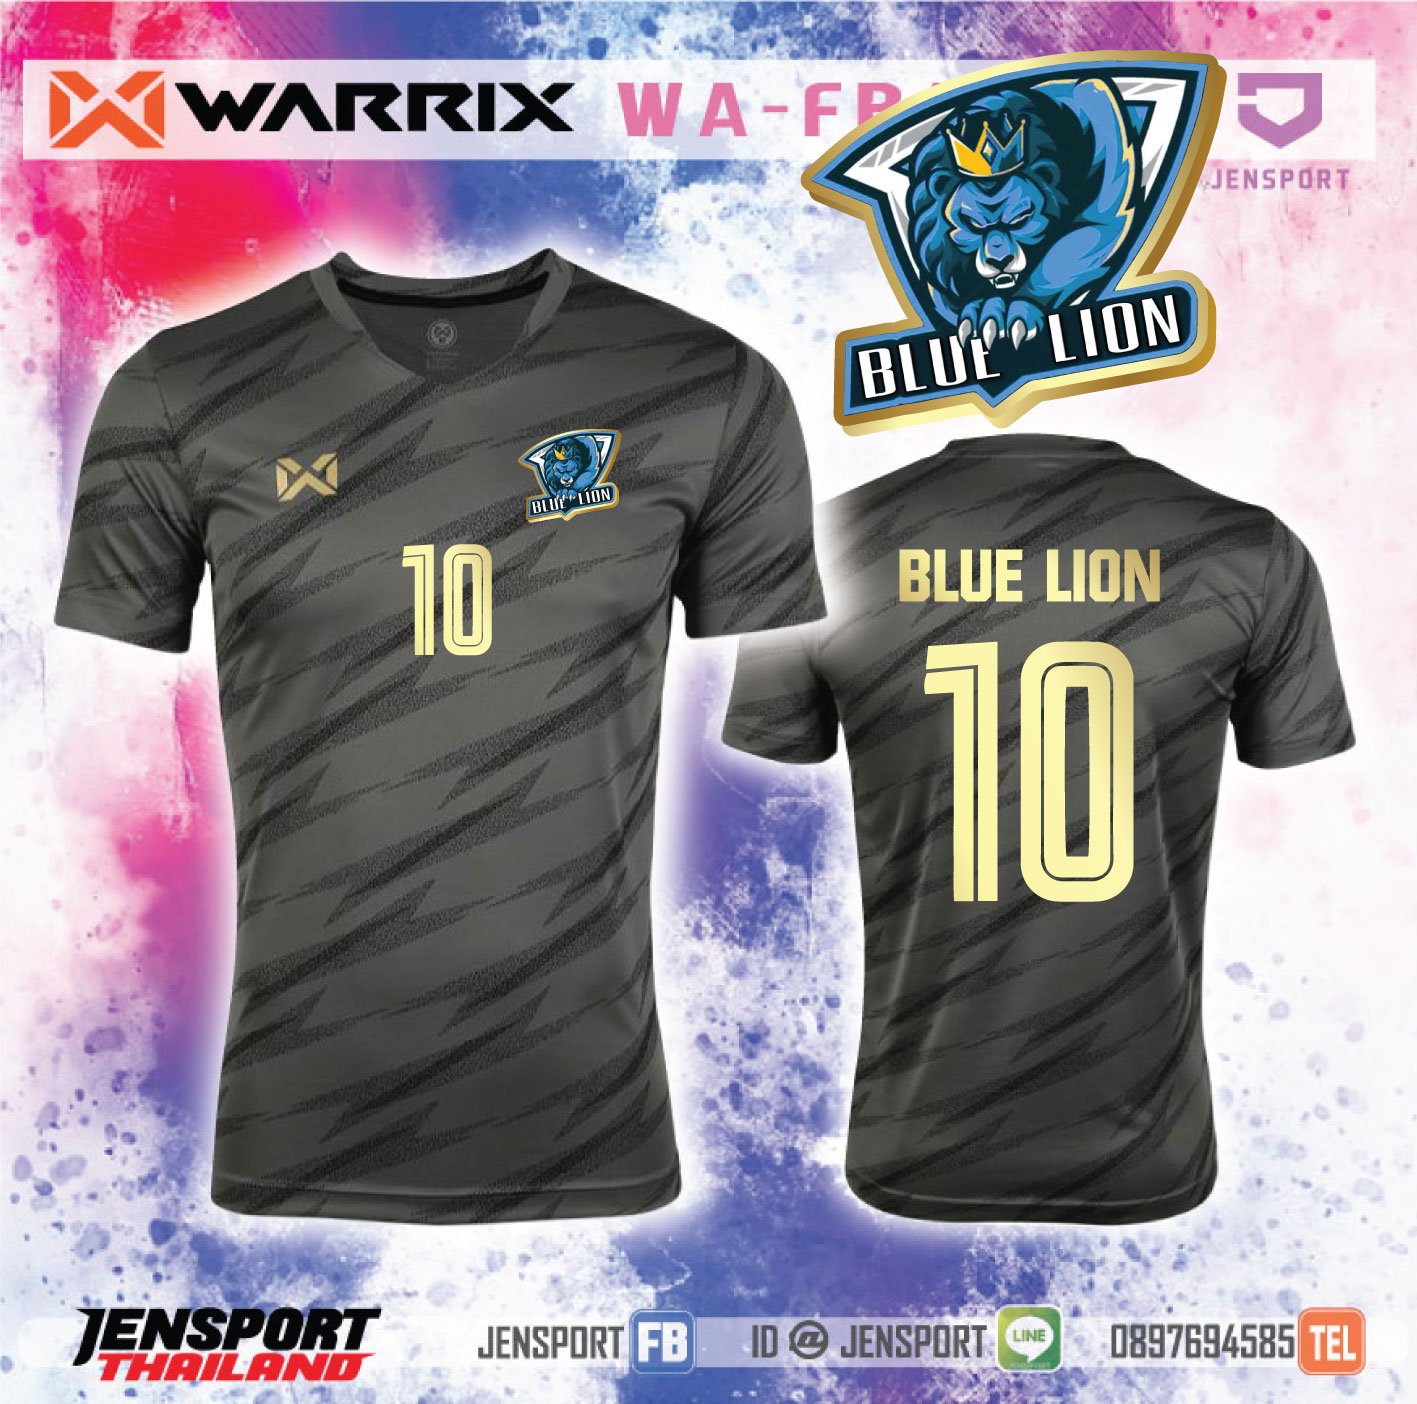 warrix WA-FBA575 team Blue Lion